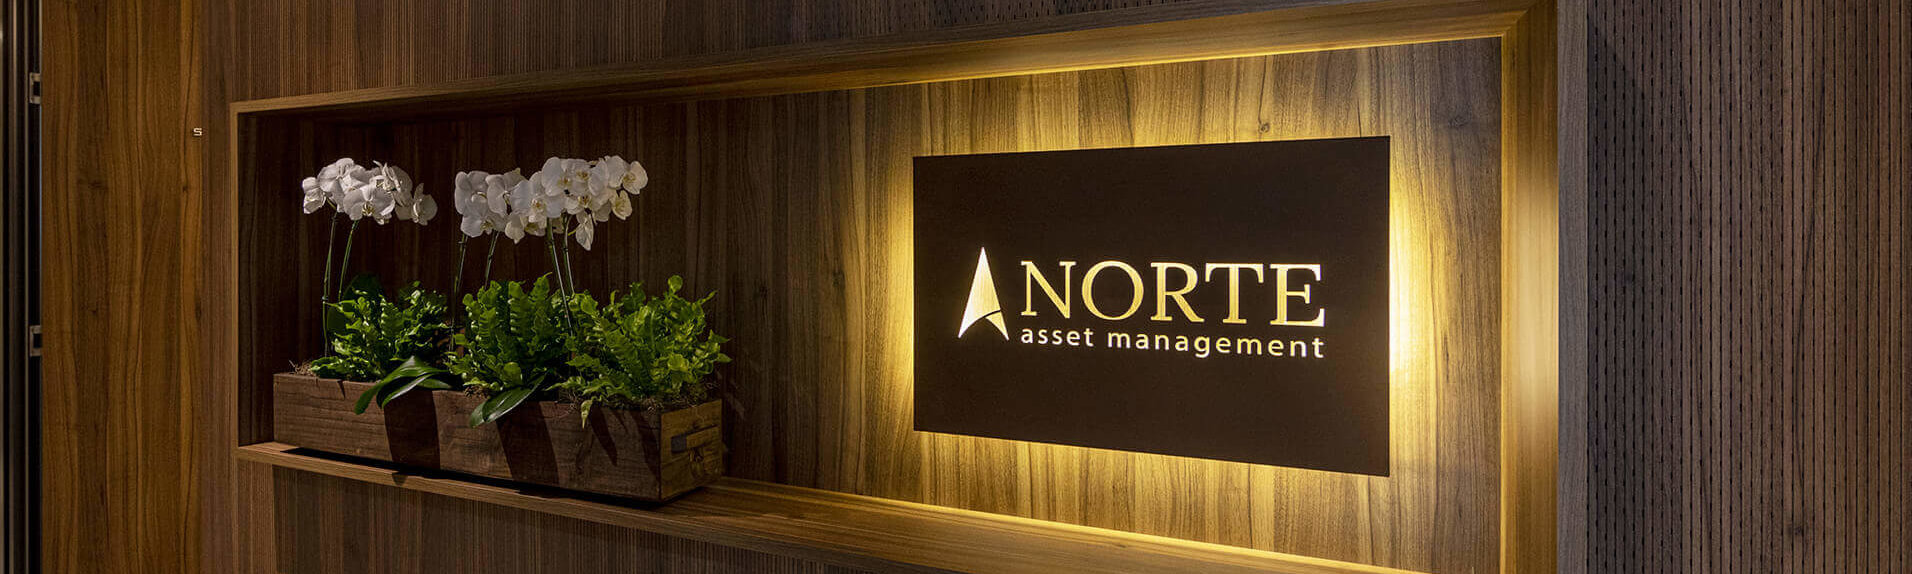 Norte Asset Management